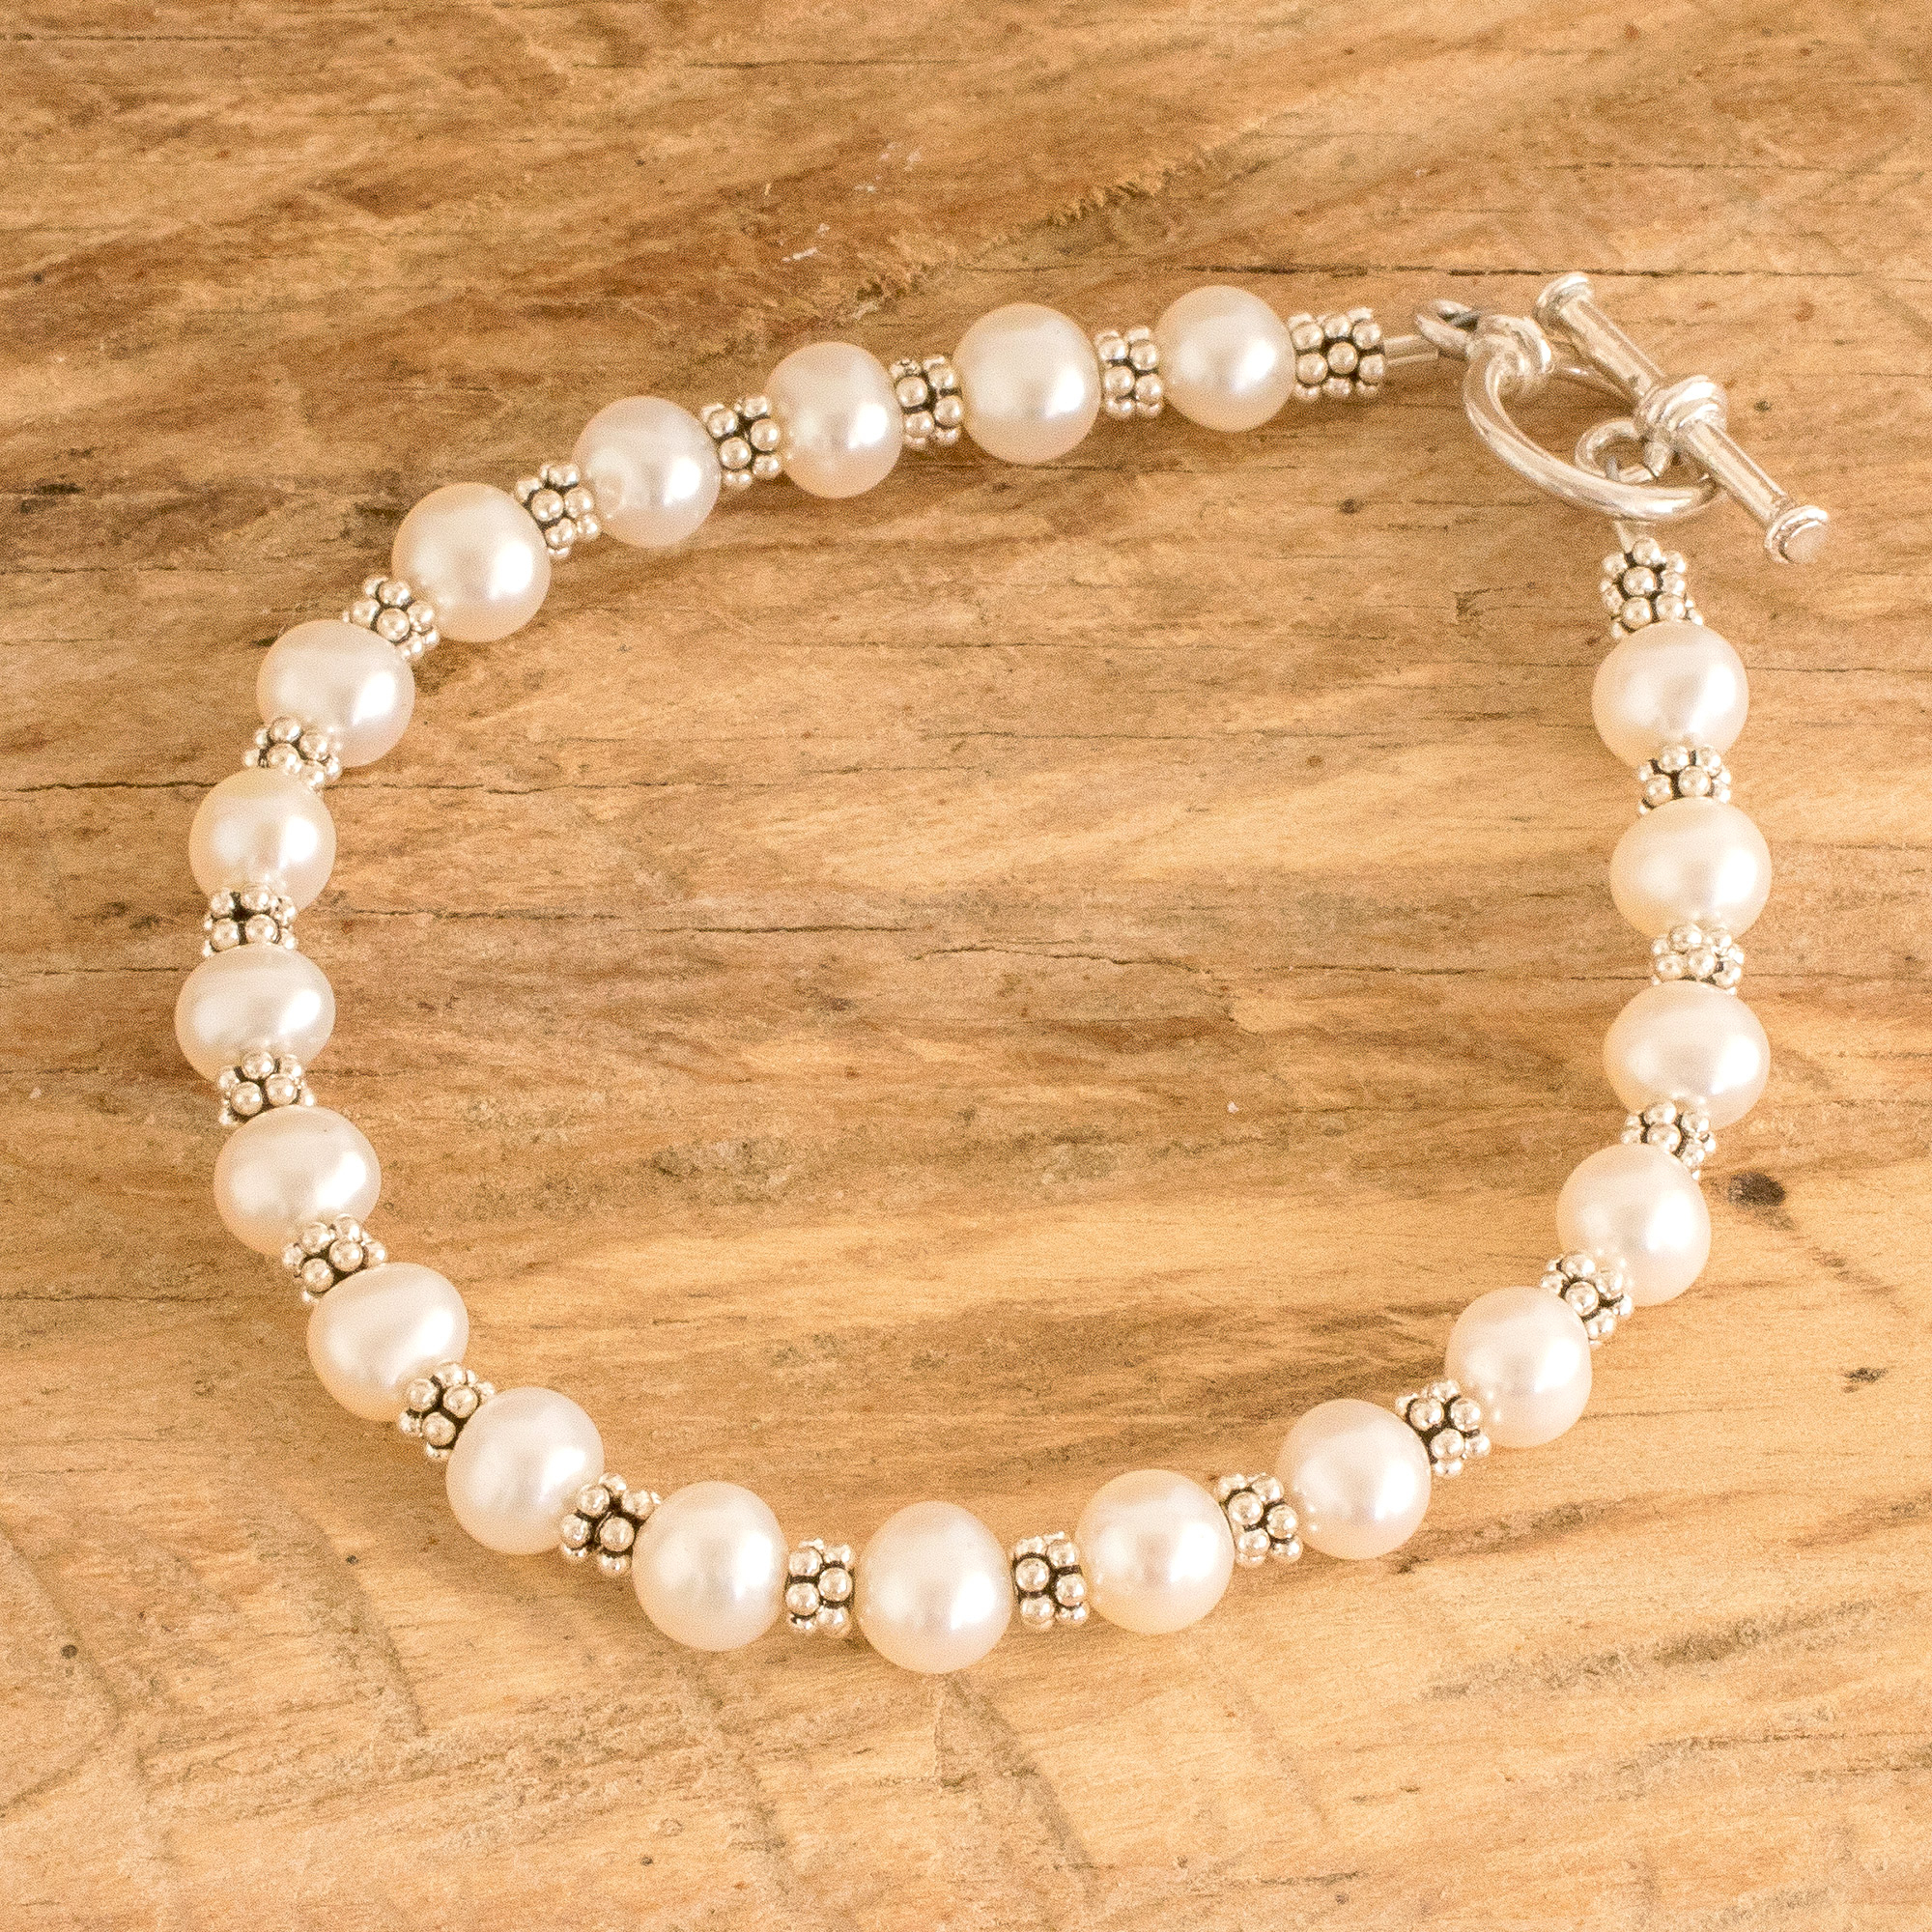 3 Easy Beading Pearl and Crystal Bangle Style Bracelets - YouTube